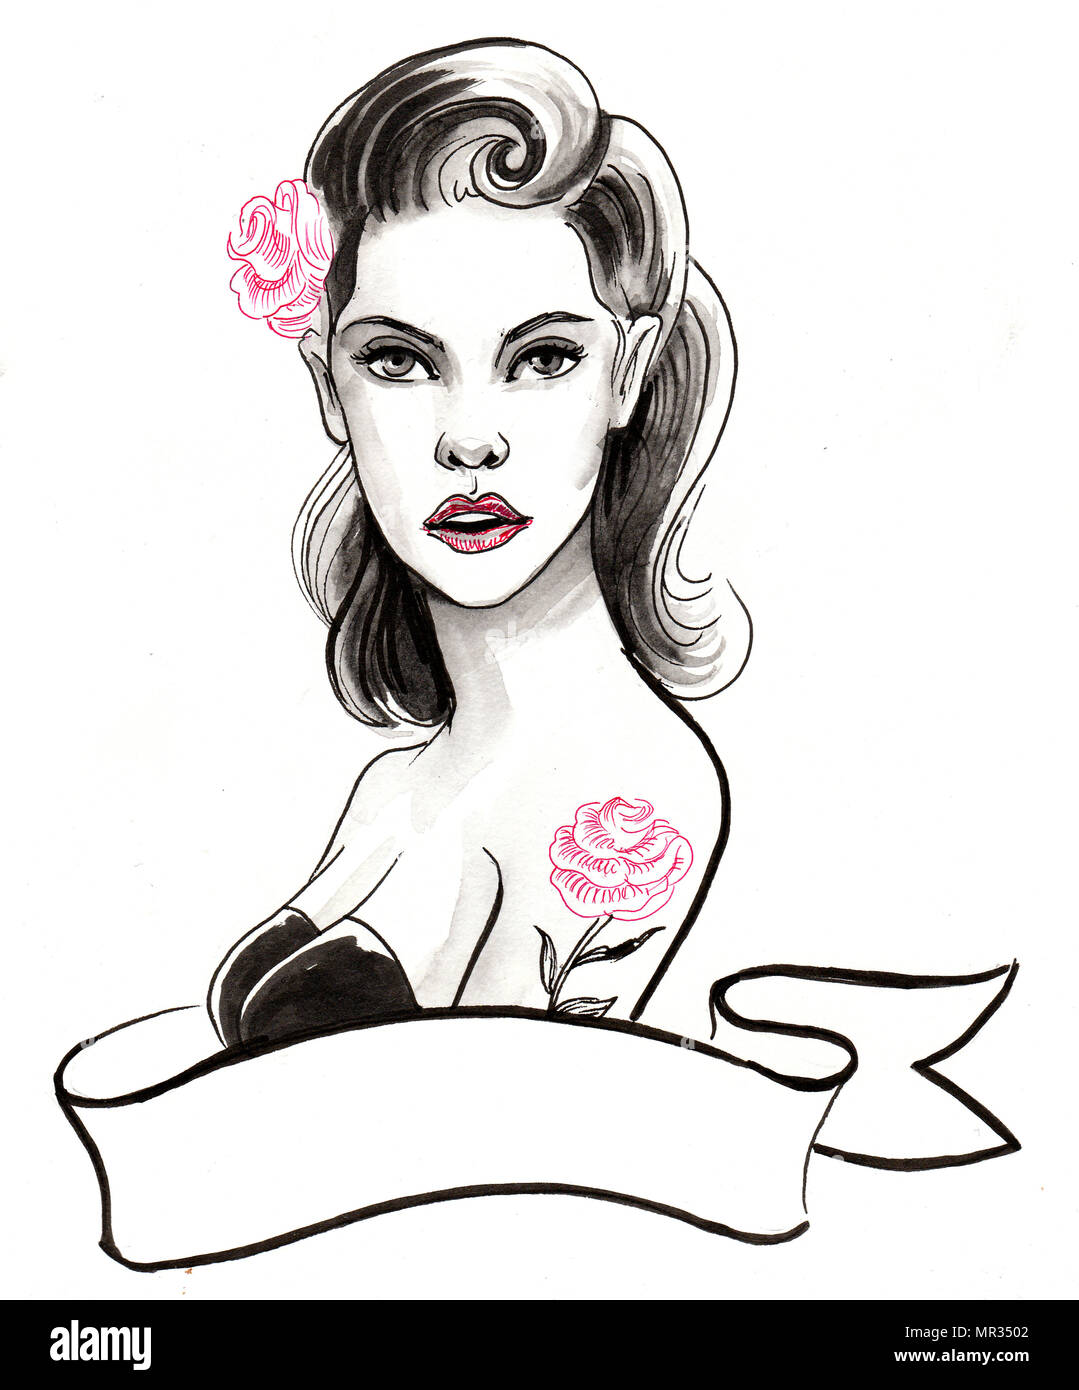 Jolie femme avec une pin up rose tattoo Banque D'Images